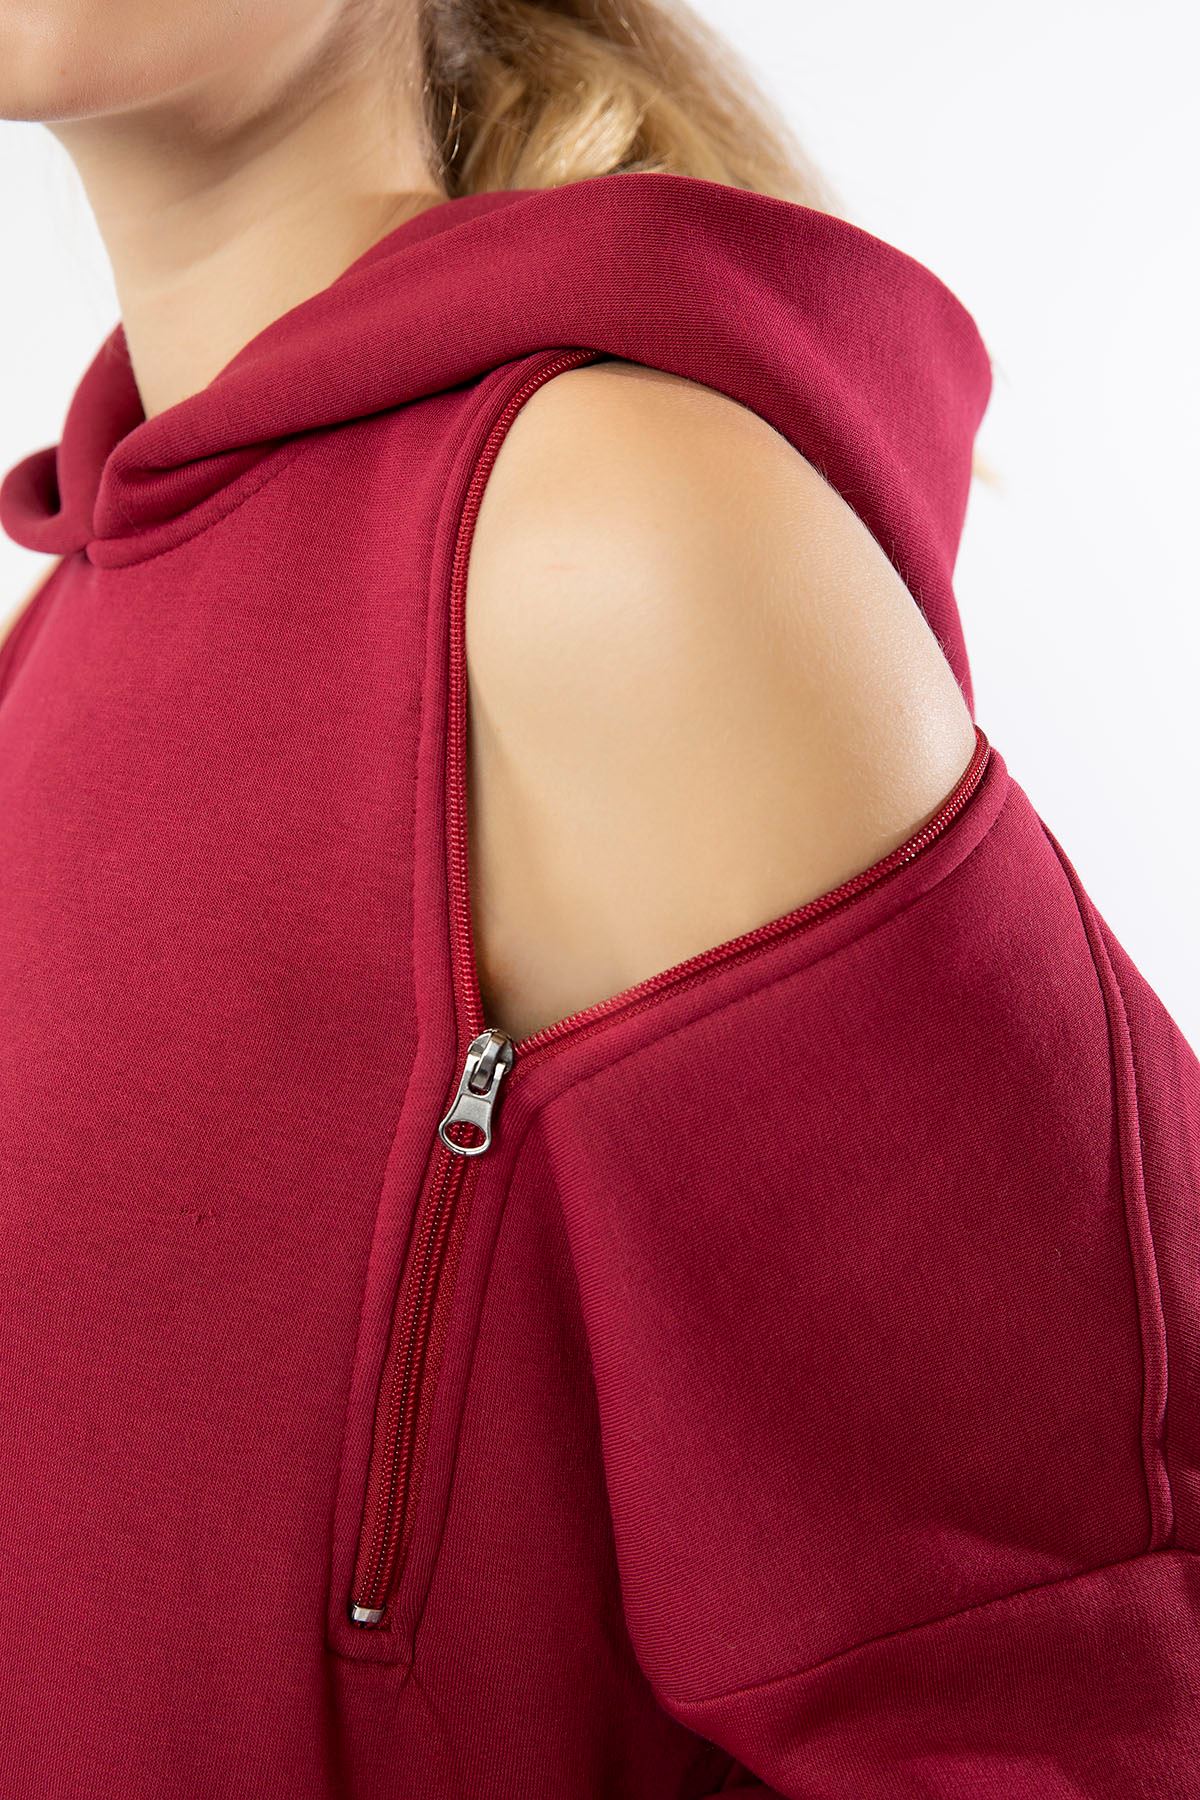 Third Knit Fabric Hooded Below The Hip Oversize Button Women Sweatshirt - Burgundy